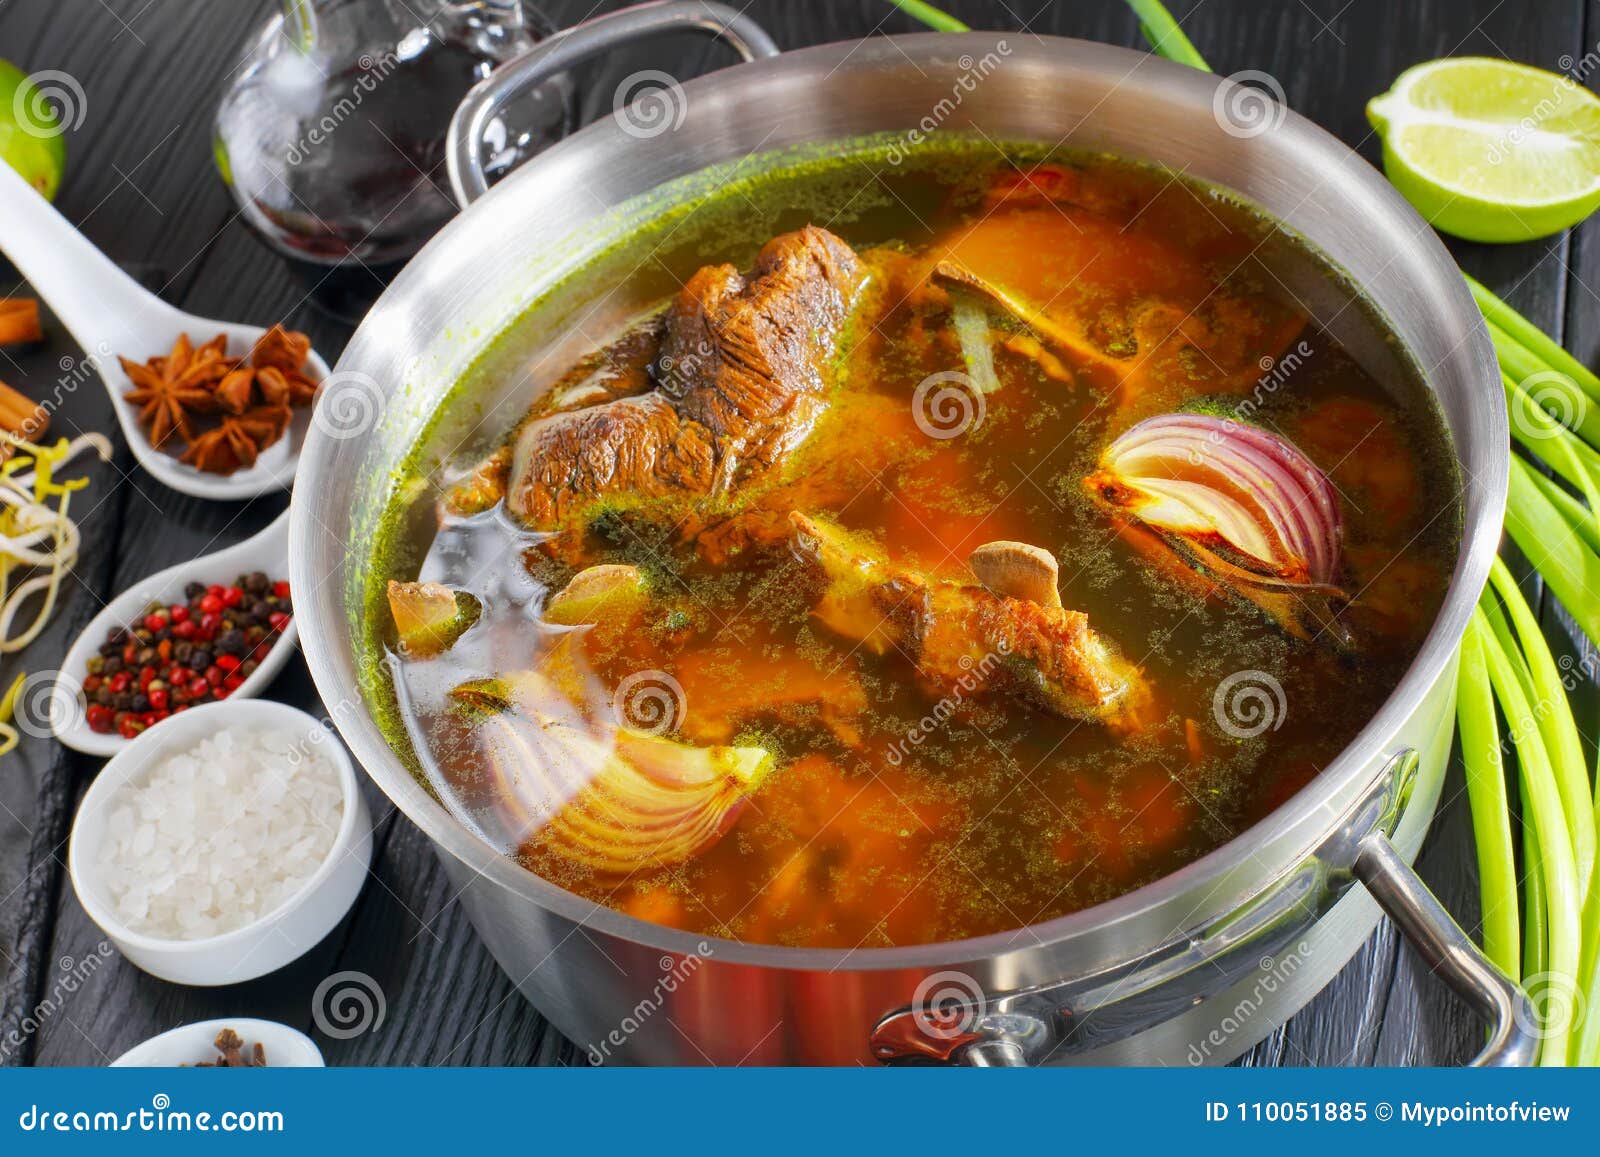 Ingredients for Vietnamese Soup Pho Bo Stock Image - Image of dinner ...